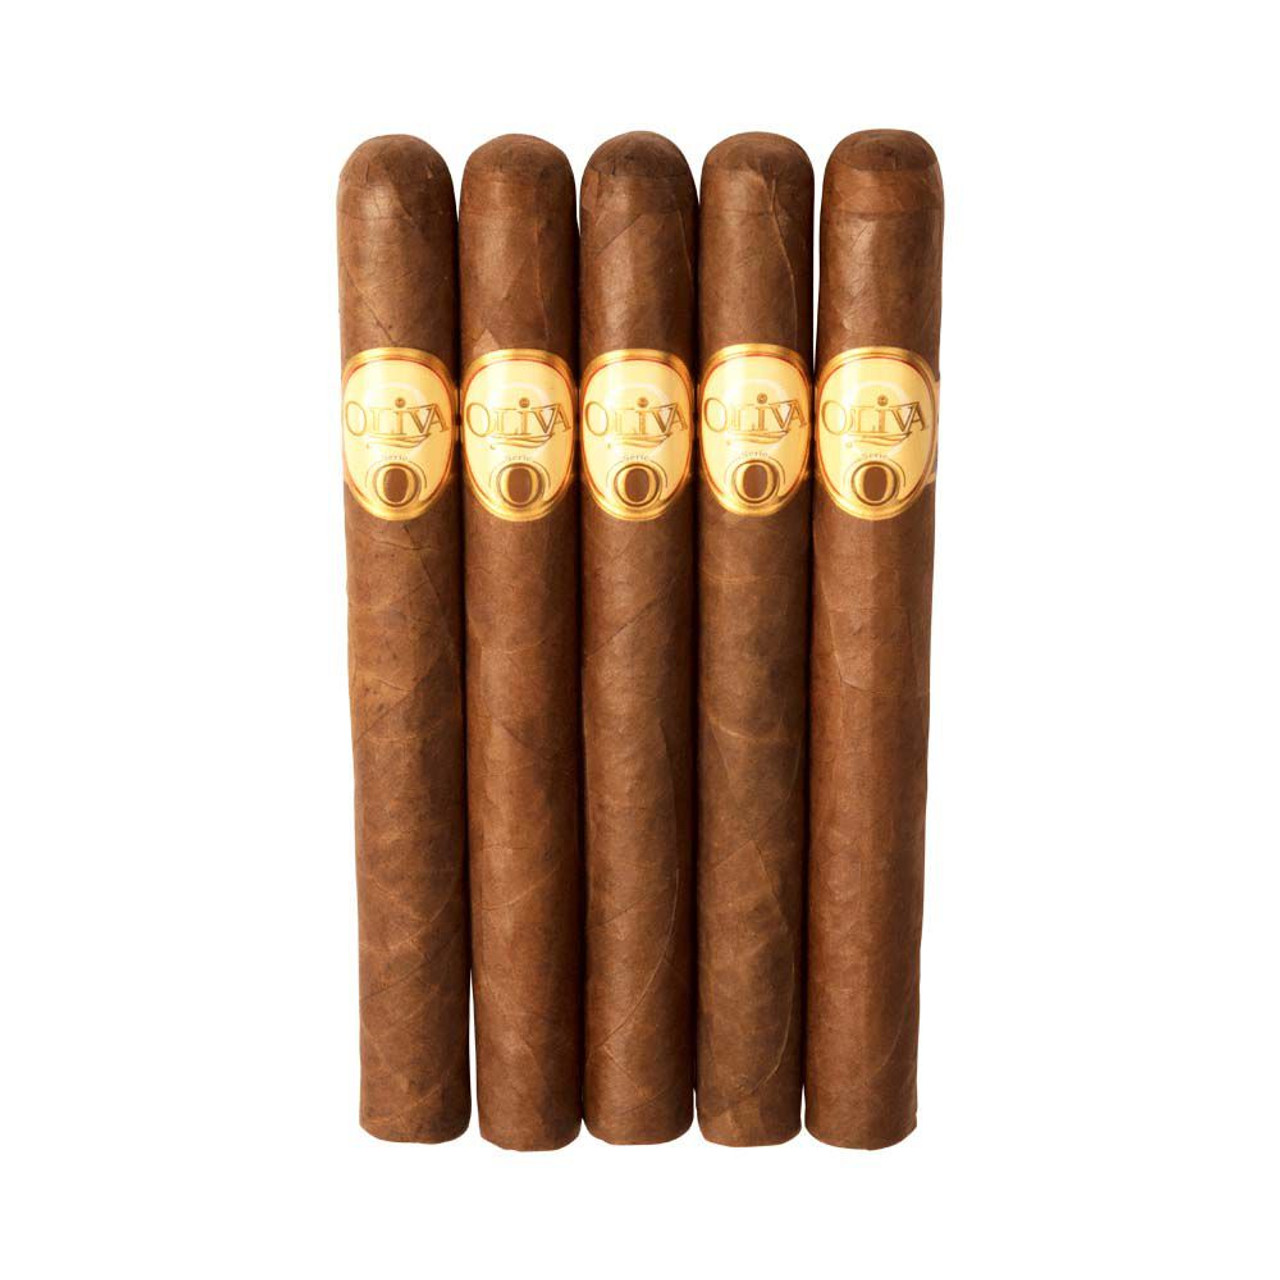 Oliva Serie O Churchill Cigars - 7 x 50 (Pack of 5) *Box